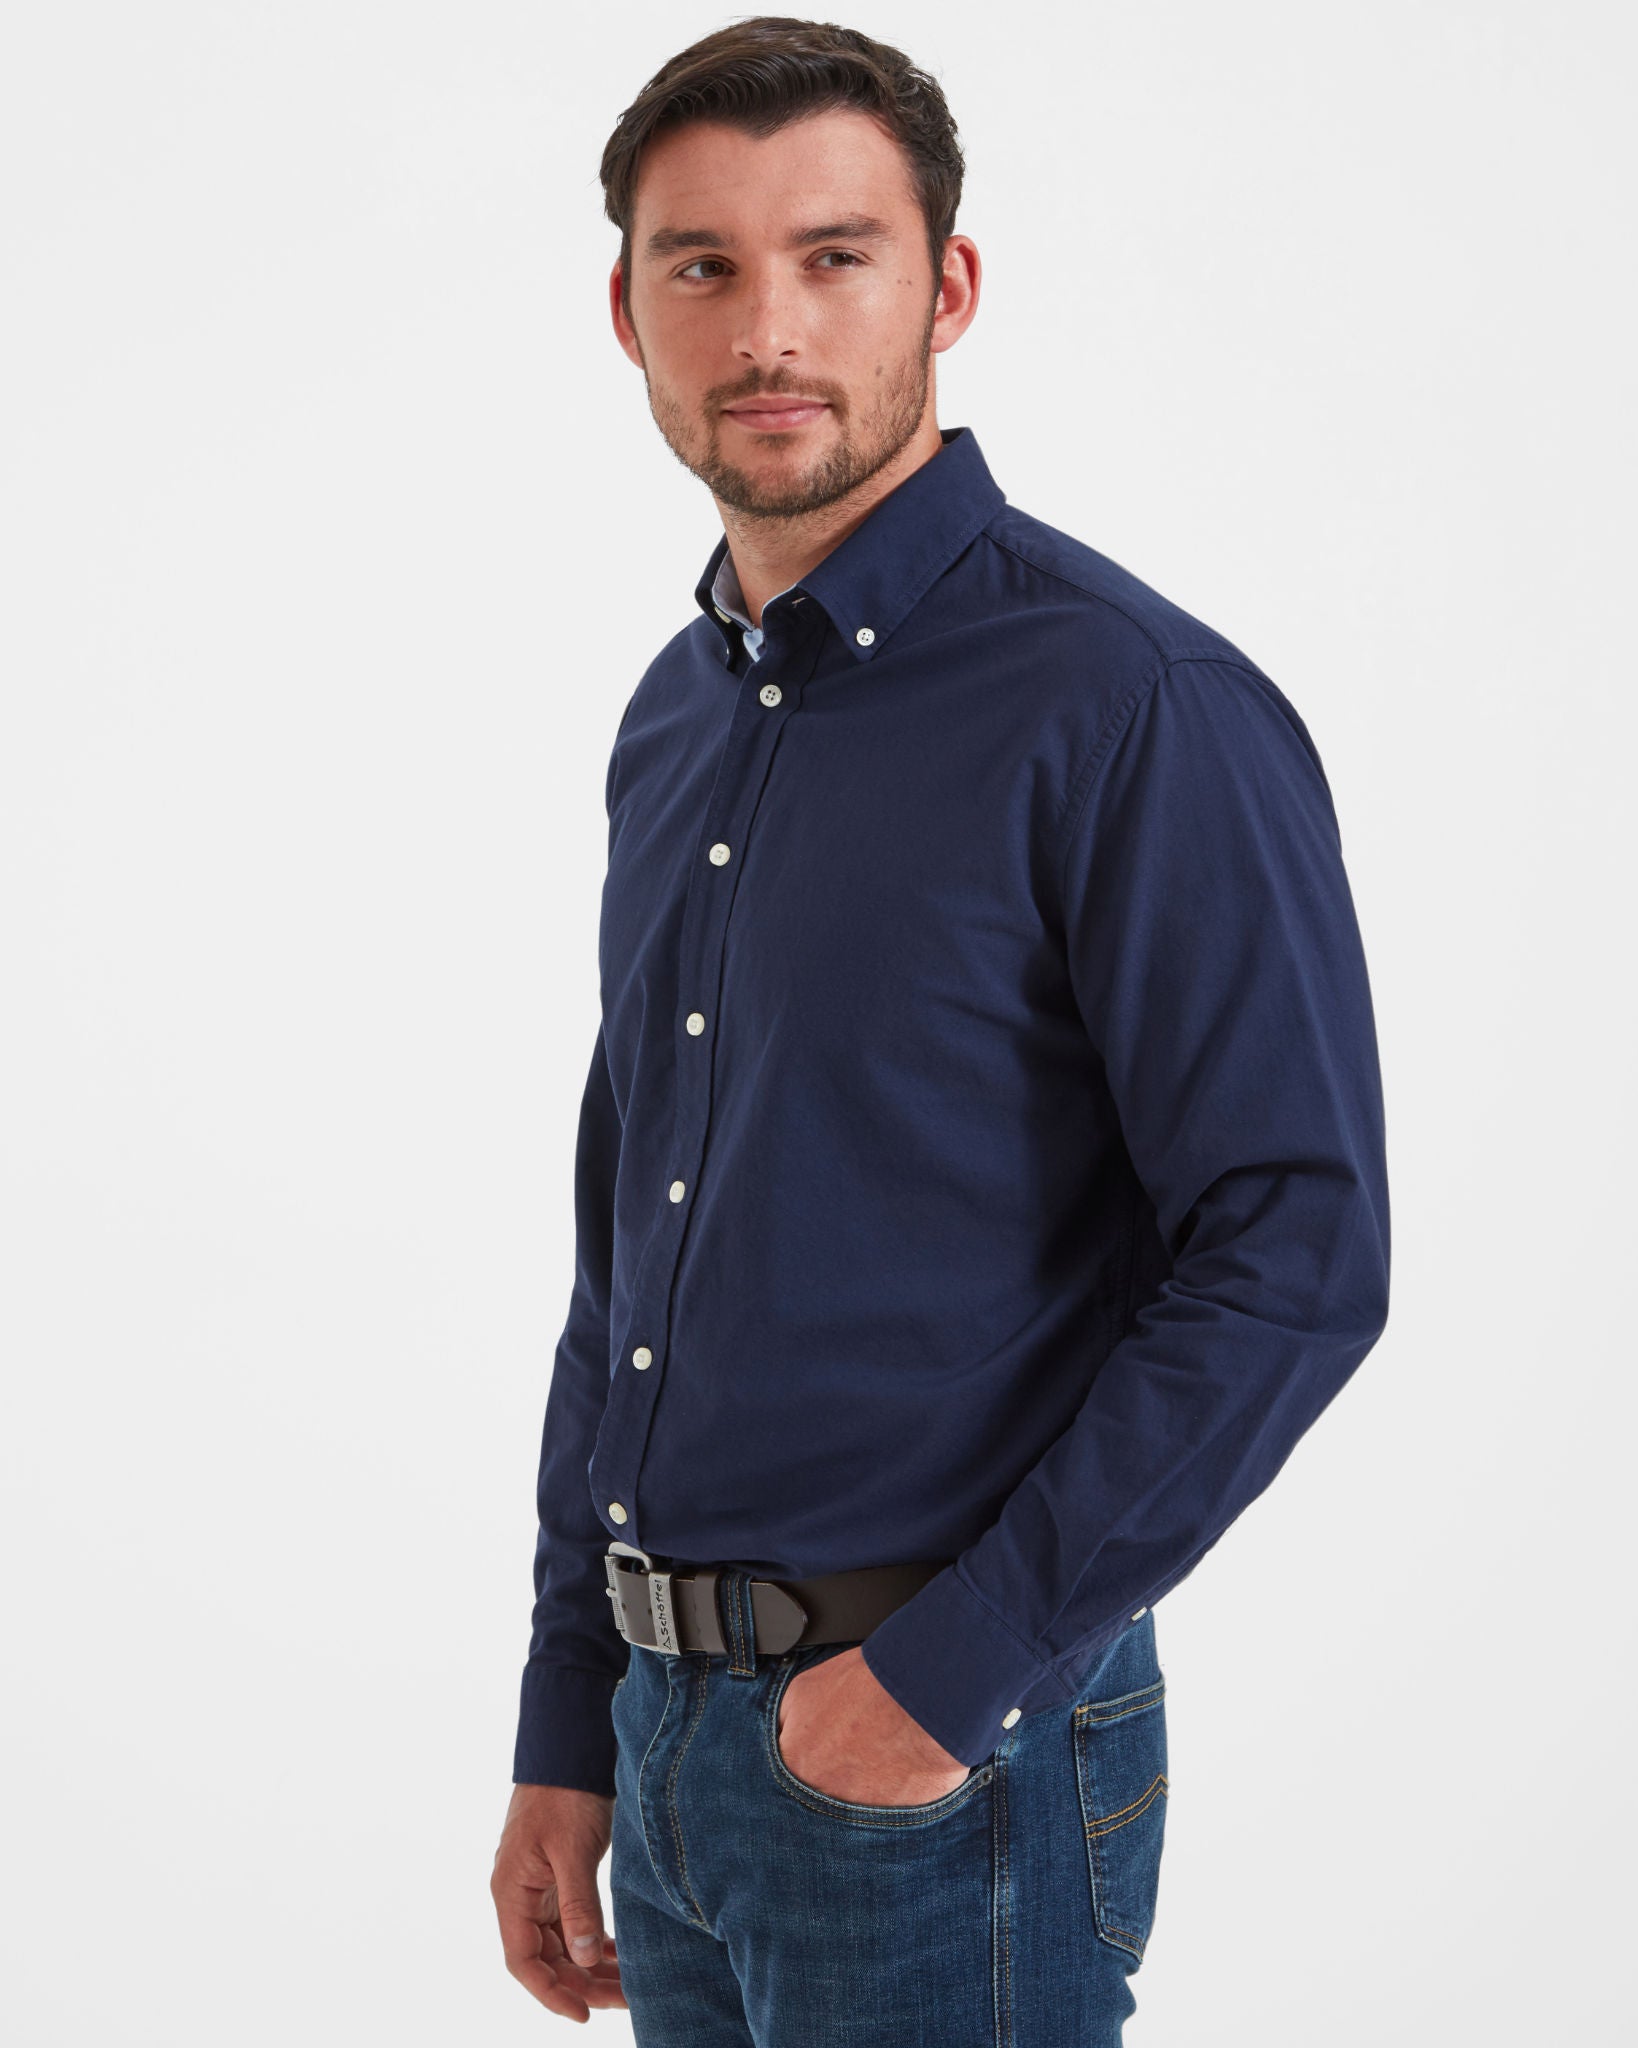 Holt Soft Oxford Tailored Shirt - Navy